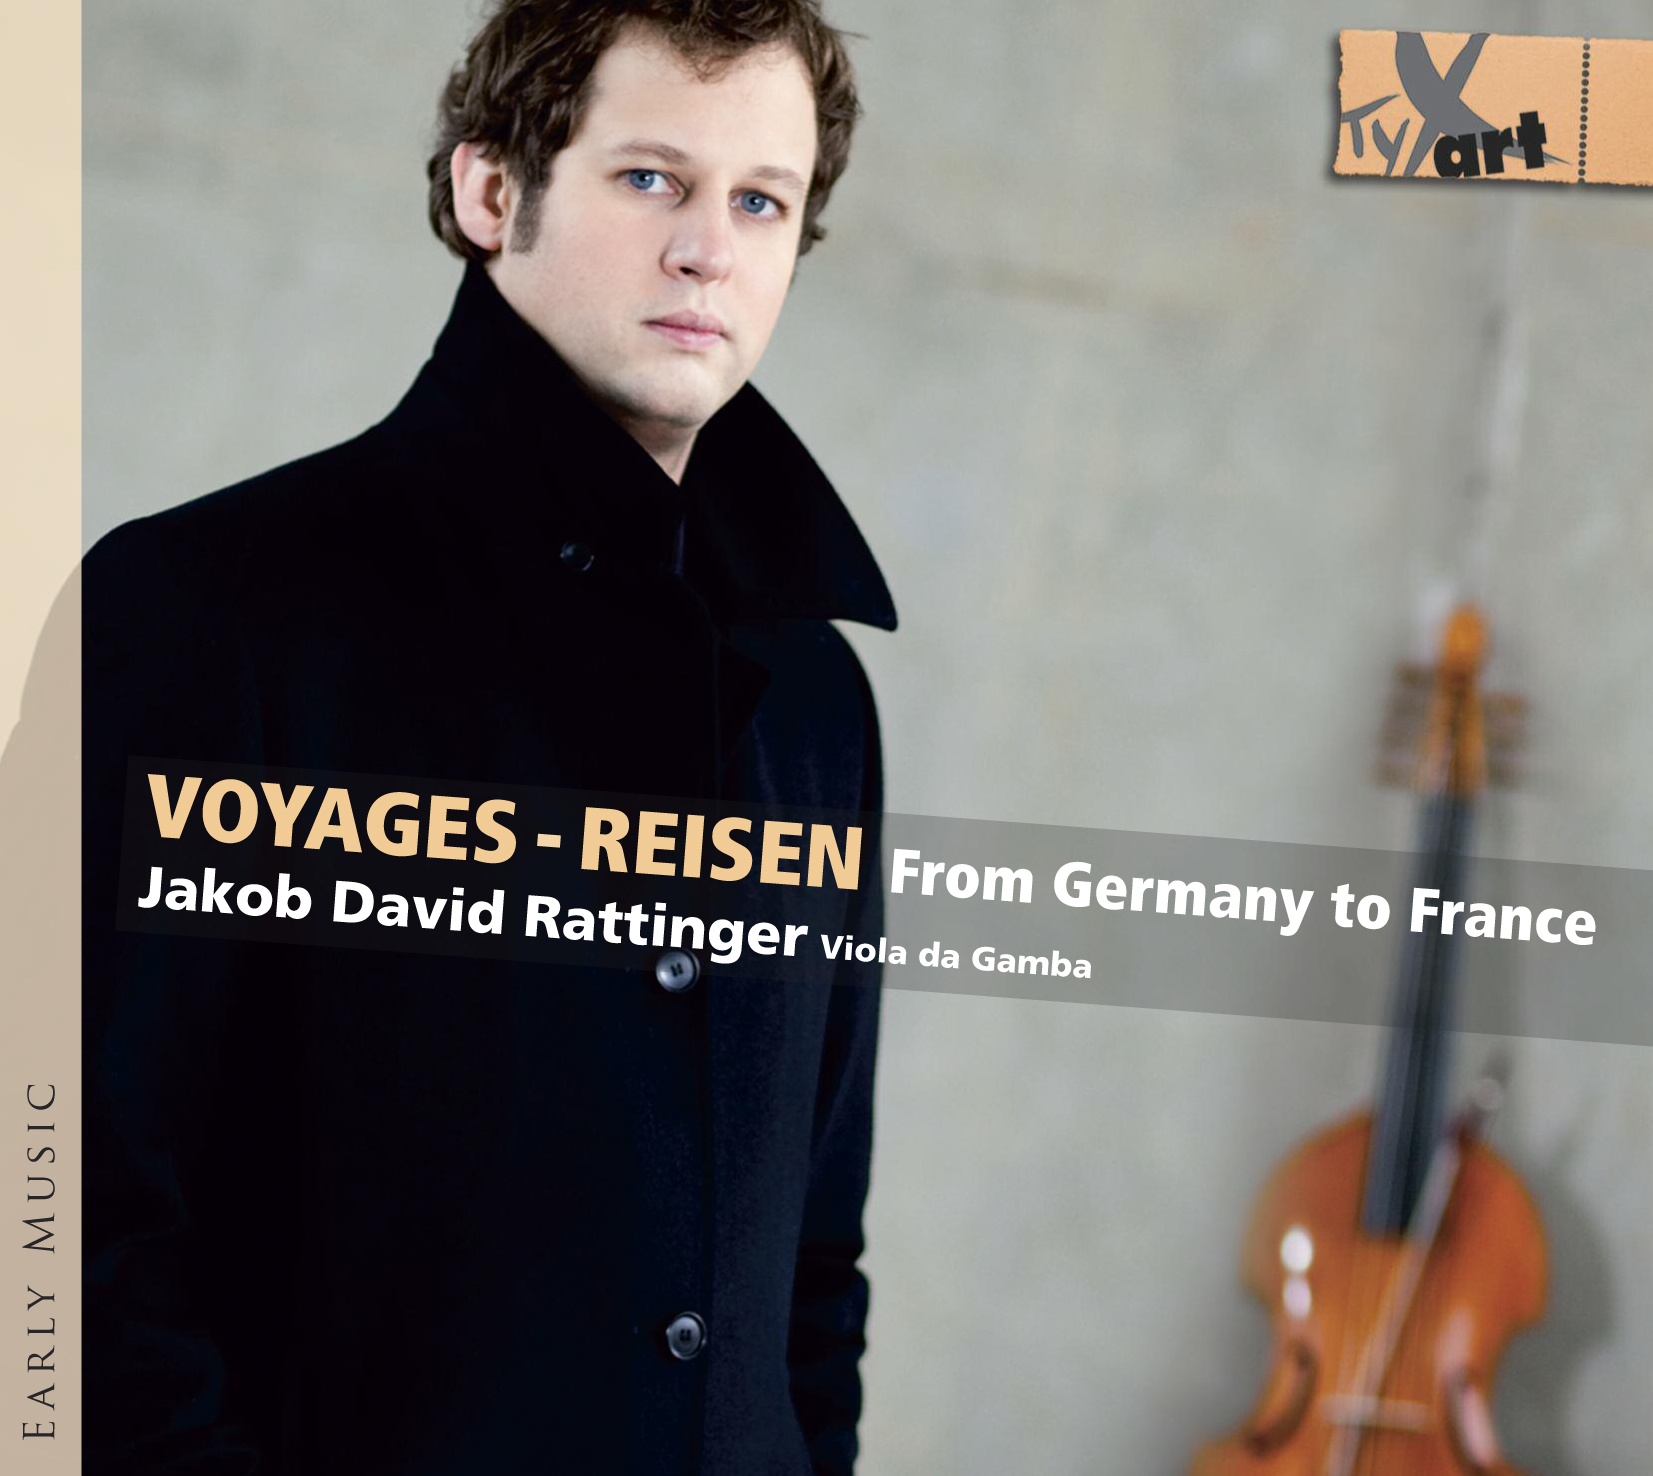 Voyages - Reisen: Jakob David Rattinger